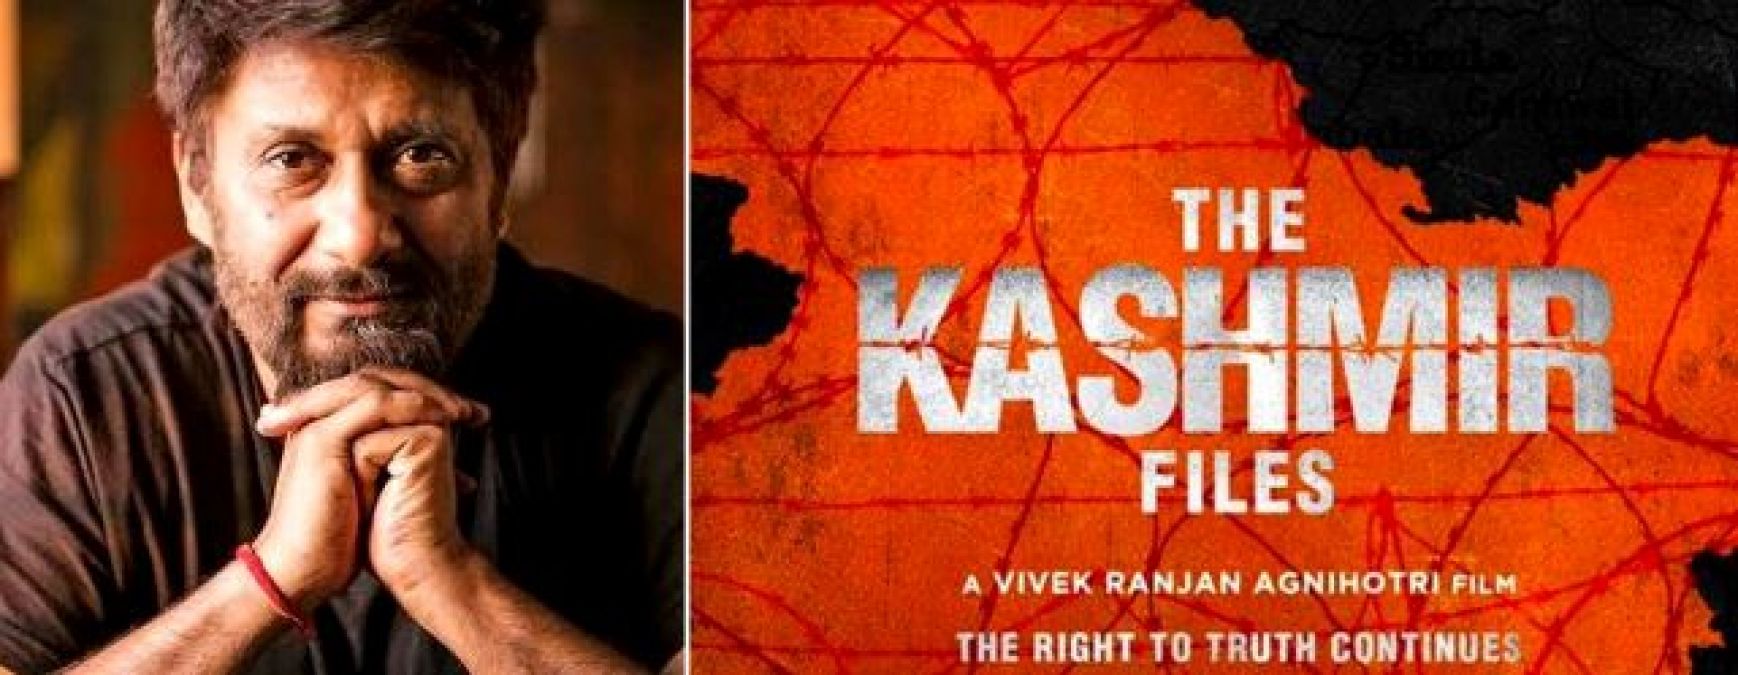 Vivek Ranjan Agnihotri in trouble due to 'The Kashmir Files,' receiving death threats